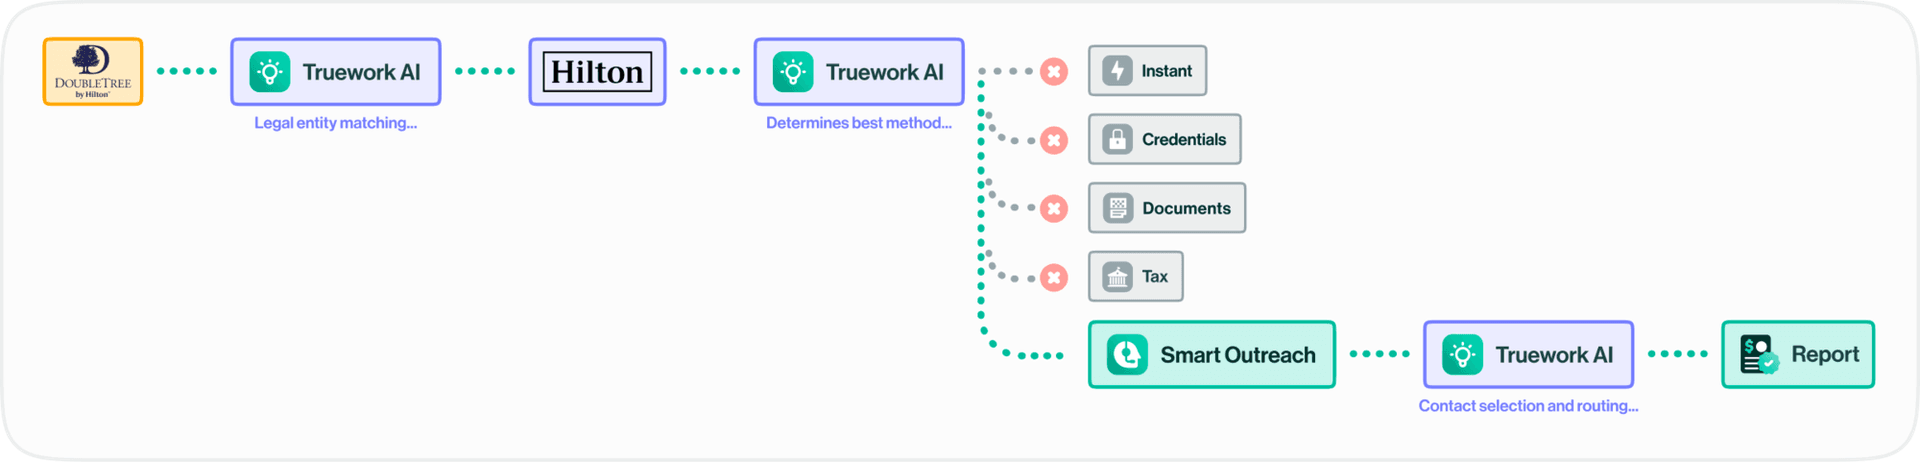 Truework AI accelerates the one-stop platform